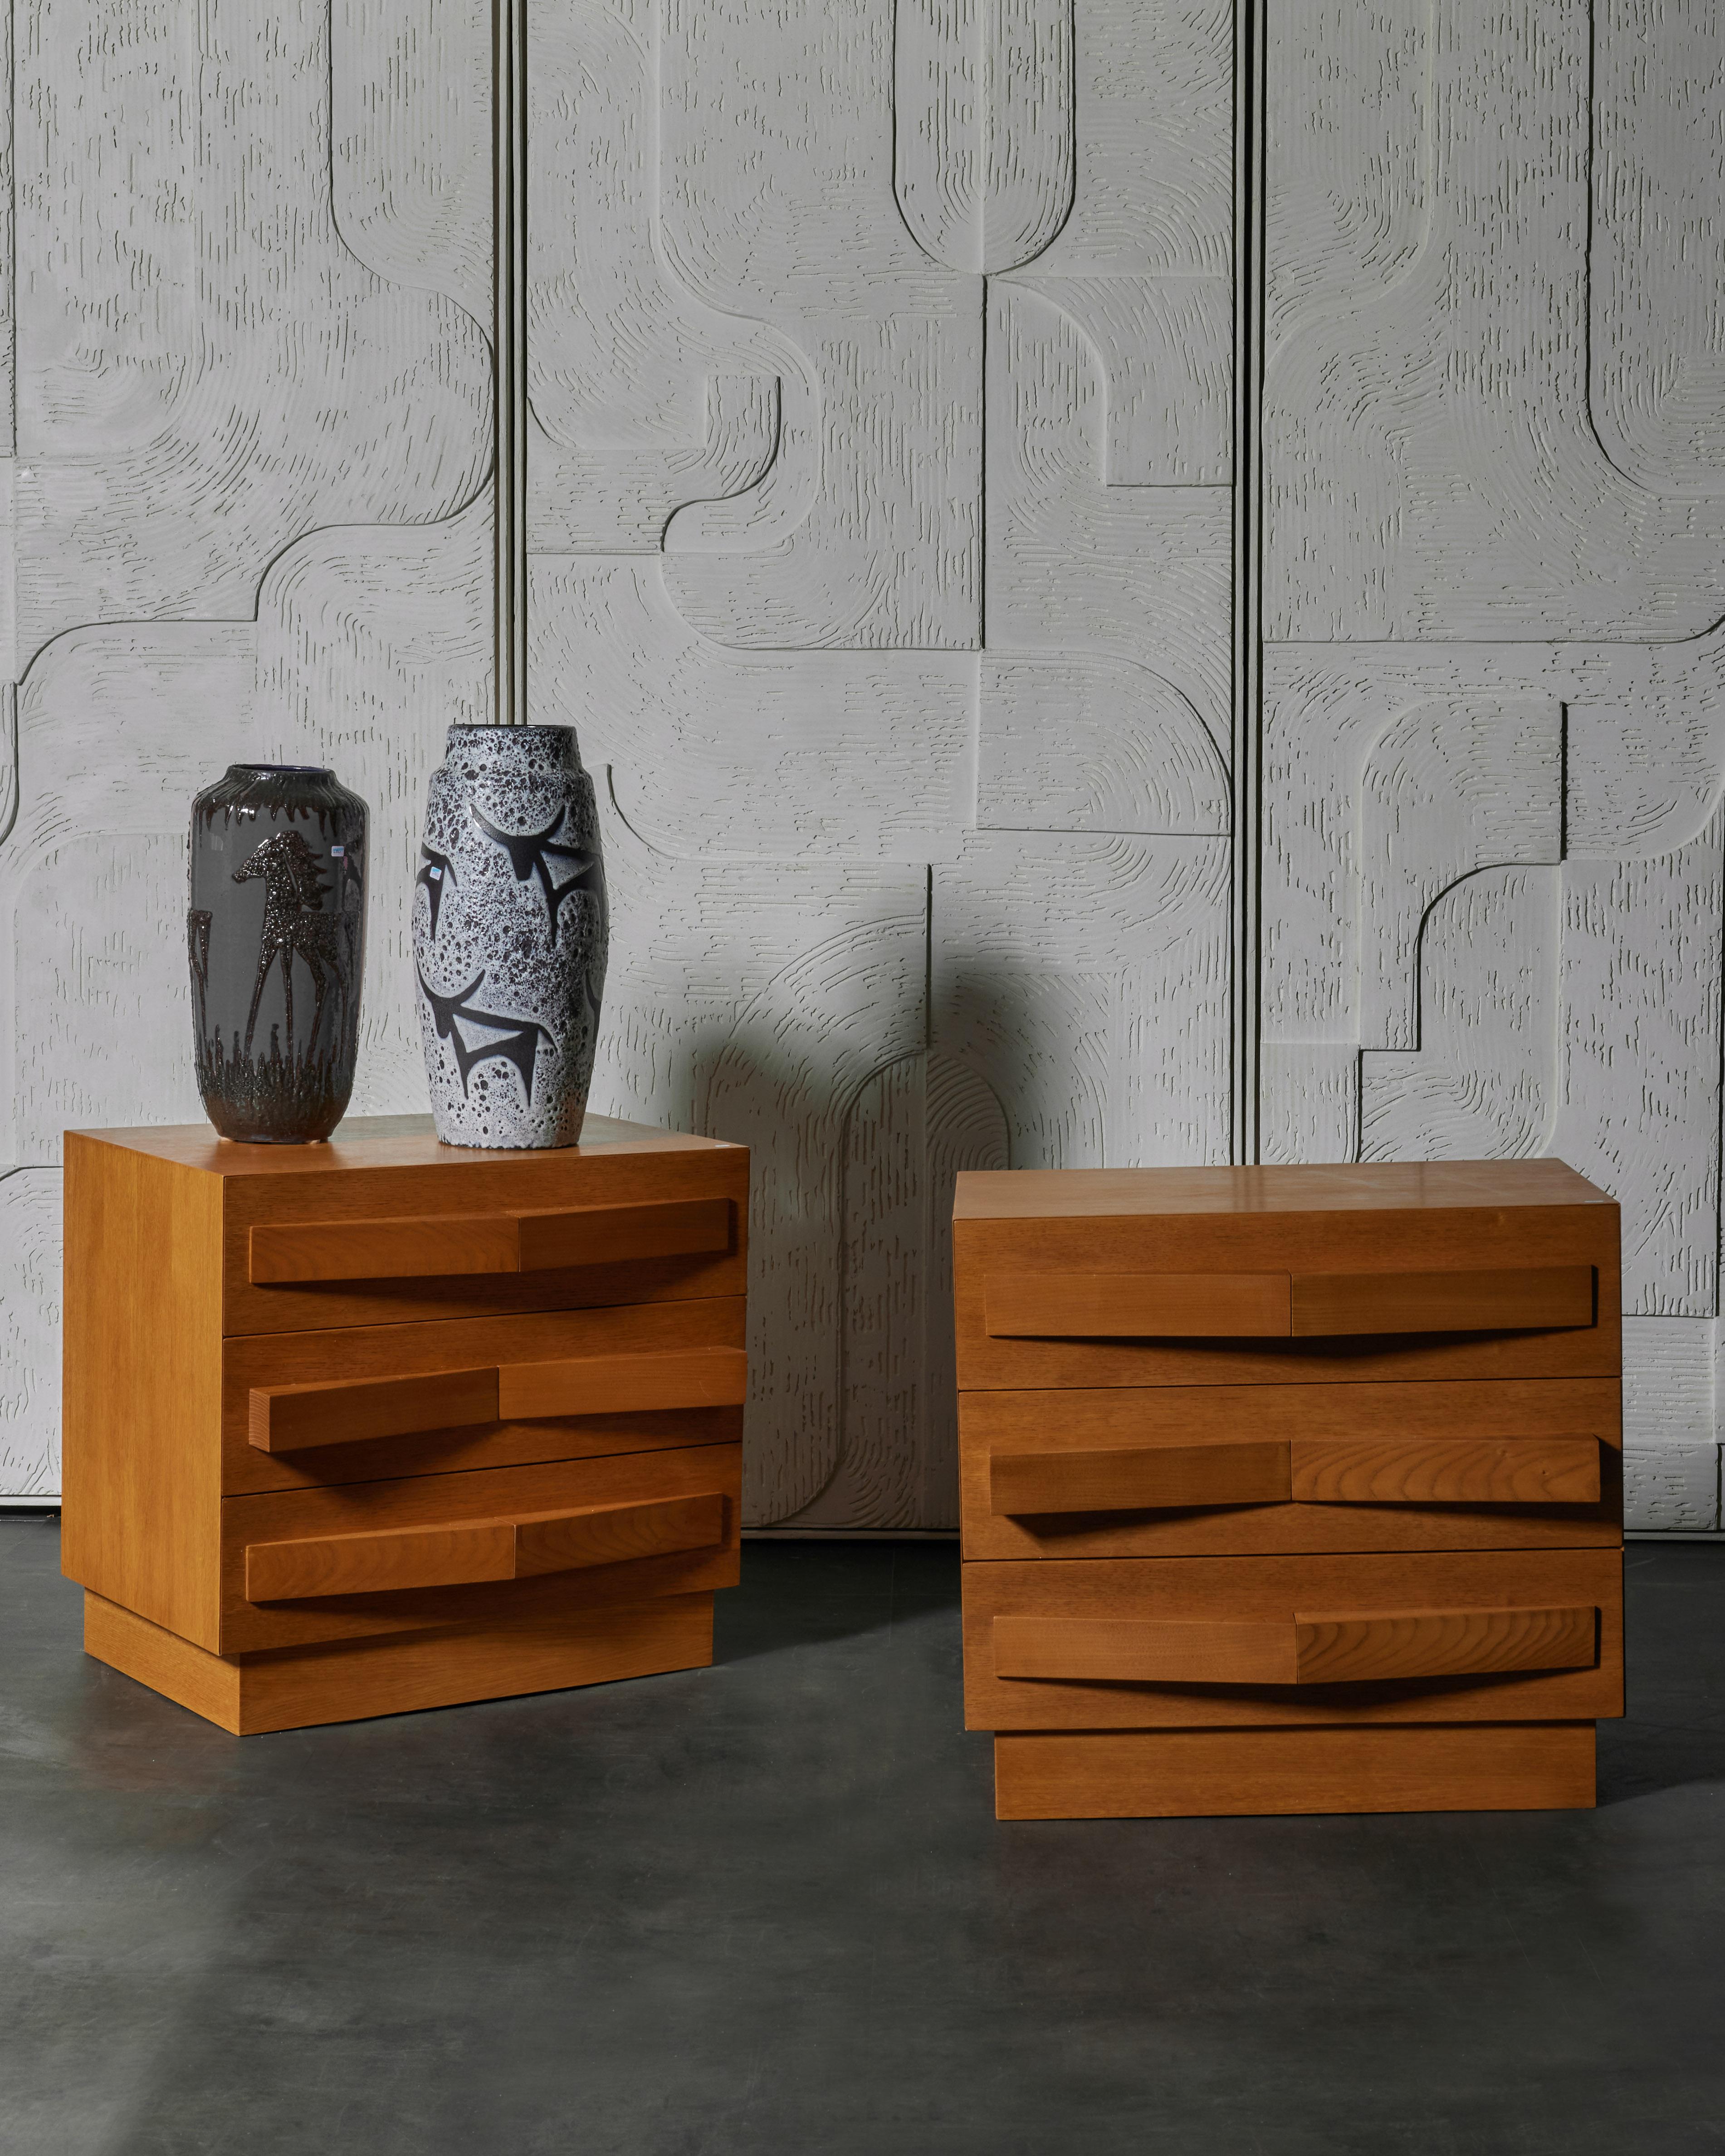 Pair of nightstands with 3 drawers in oakwood.
Creation by Studio Glustin.